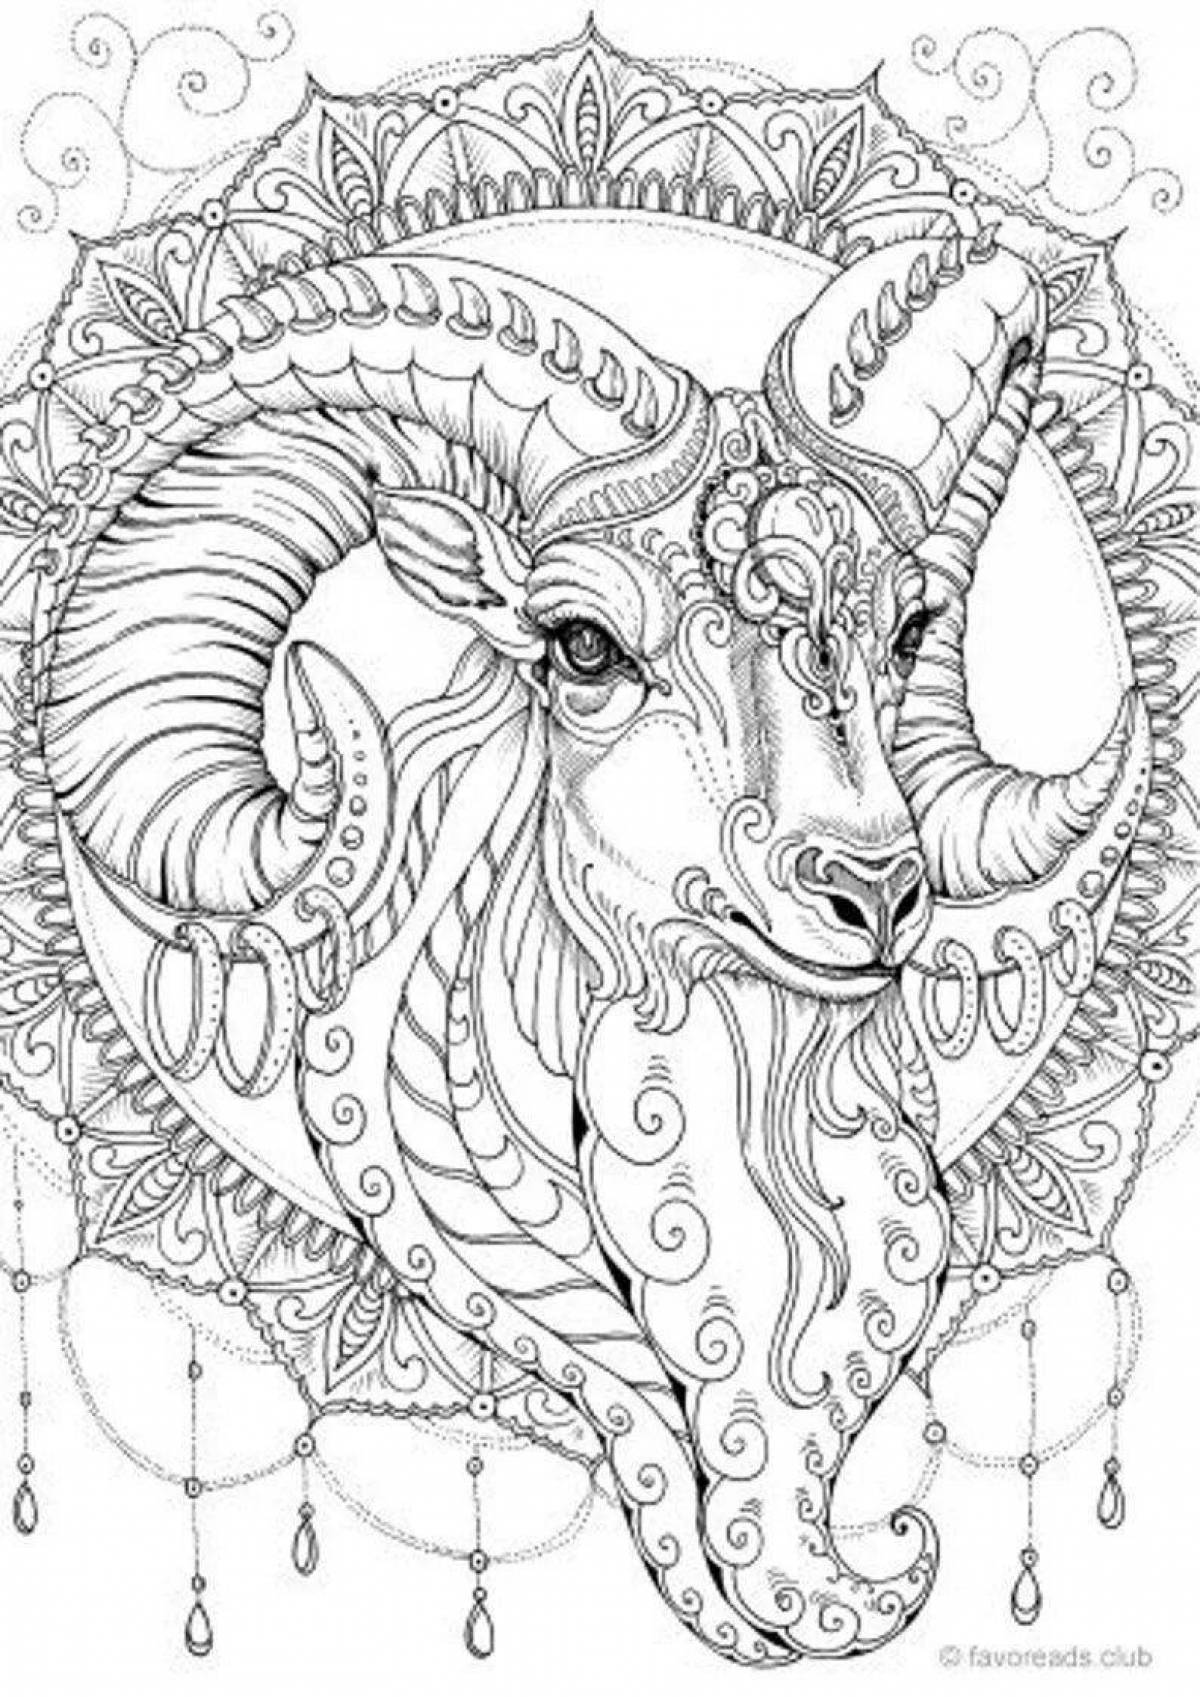 Coloring page brave zodiac sign Capricorn